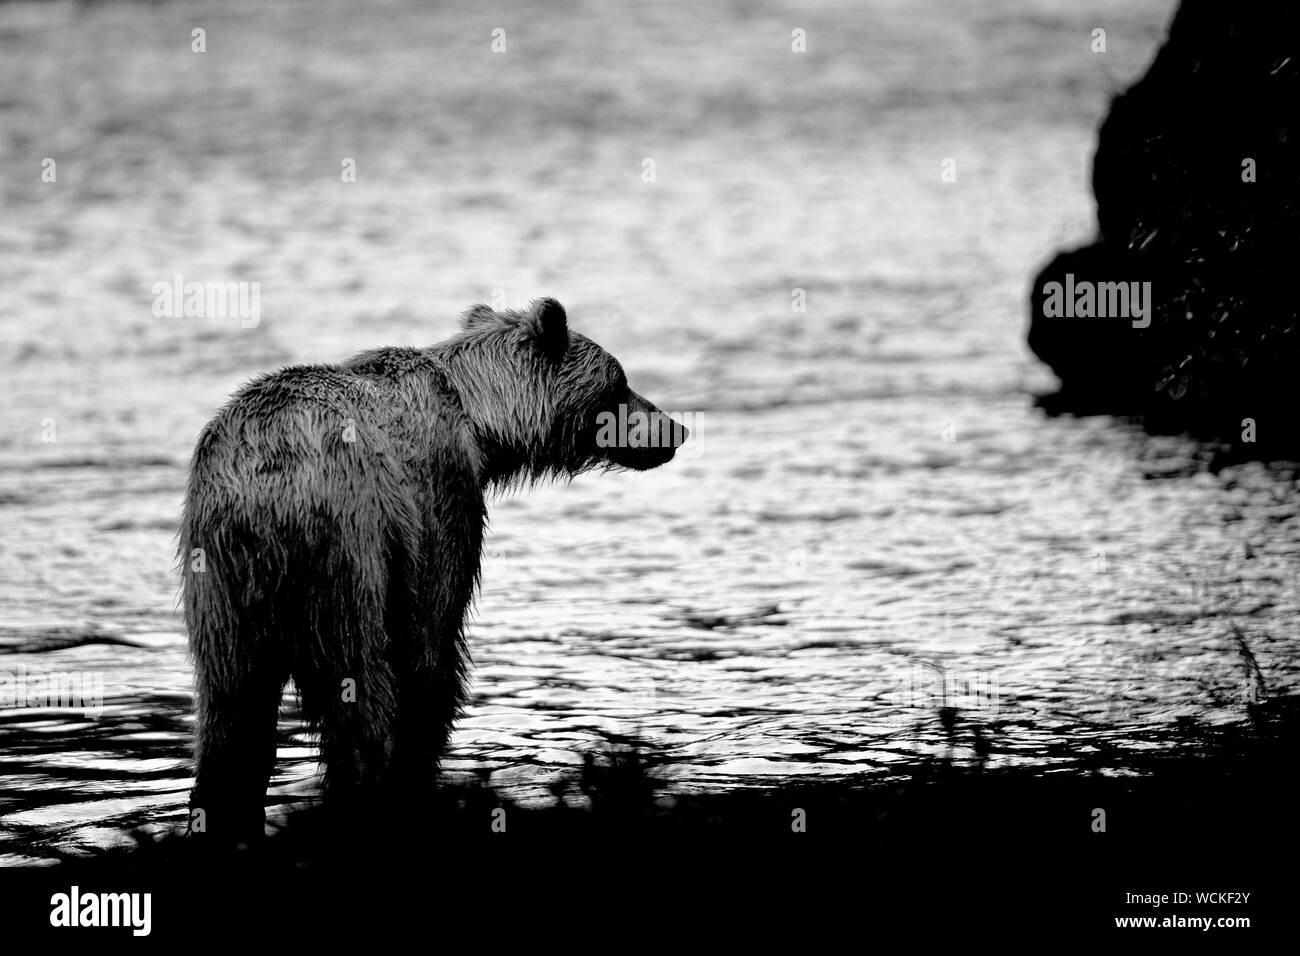 Orso grizzly nel fiume Nakina a caccia di salmone, Ursus arctos horribilis, orso bruno, Nord America, Canada, Foto Stock